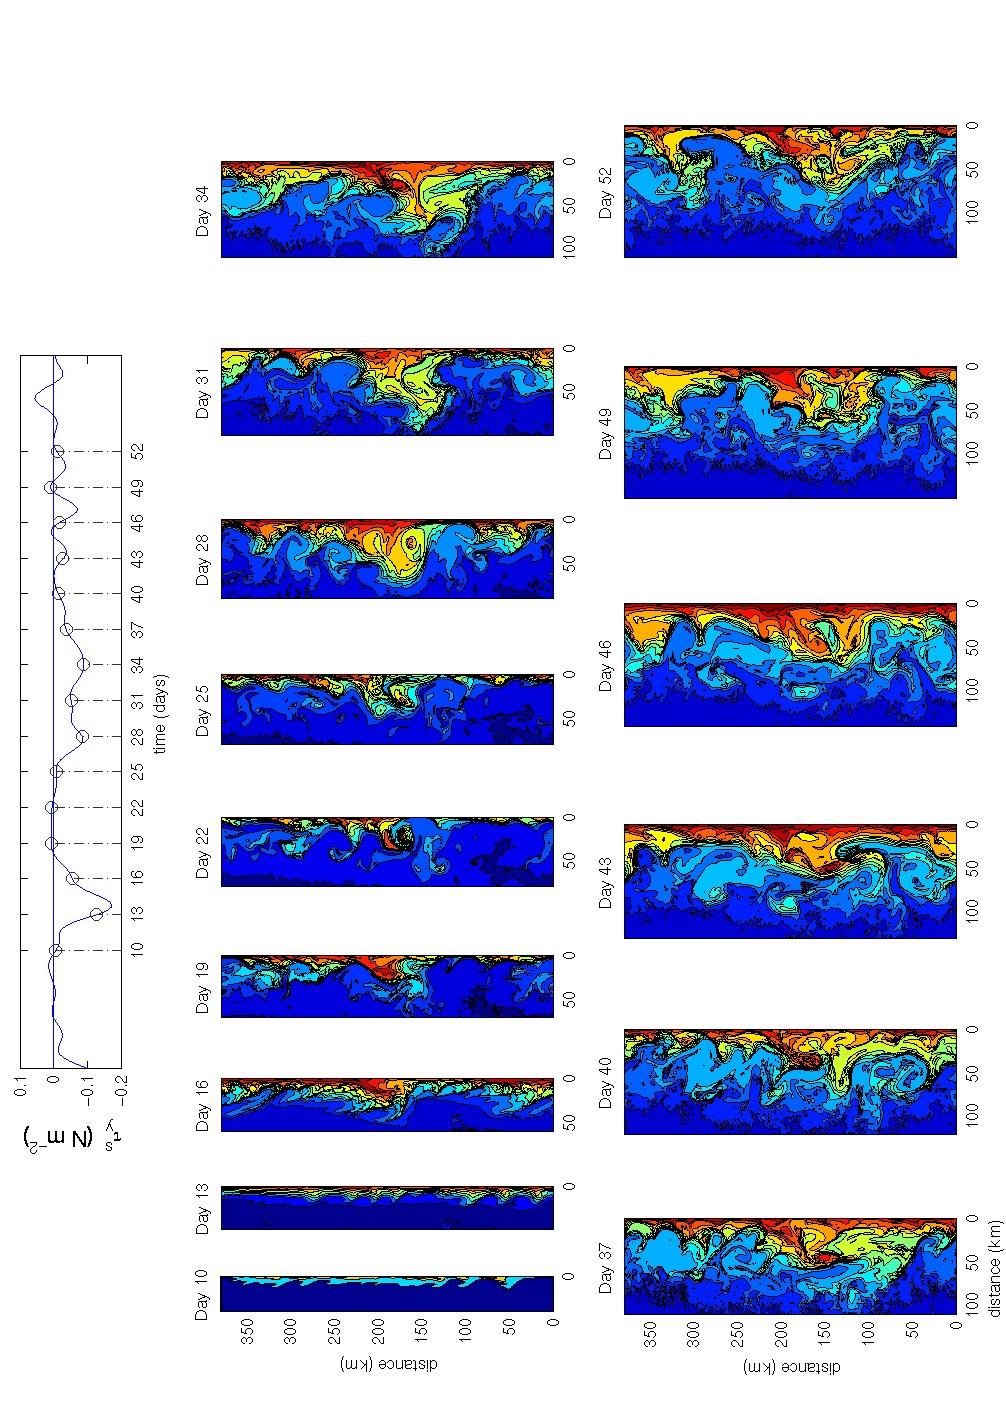 Numerical modeling - instabilities of coastal